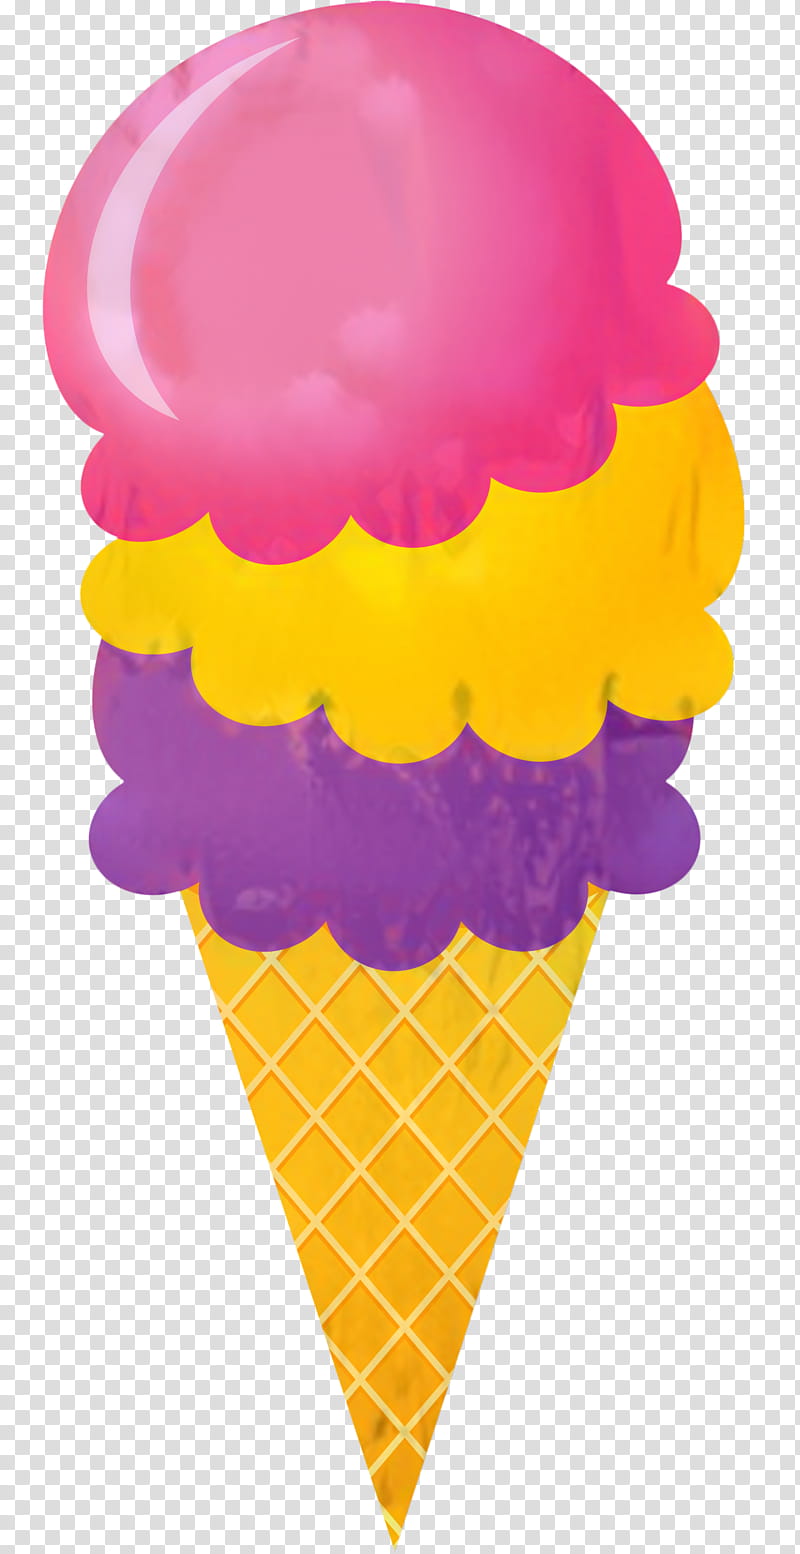 Ice Cream Cone, Ice Cream Cones, Strawberry Ice Cream, Waffle, Sprinkles, Chocolate Ice Cream, Food, Ice Cream Parlor transparent background PNG clipart